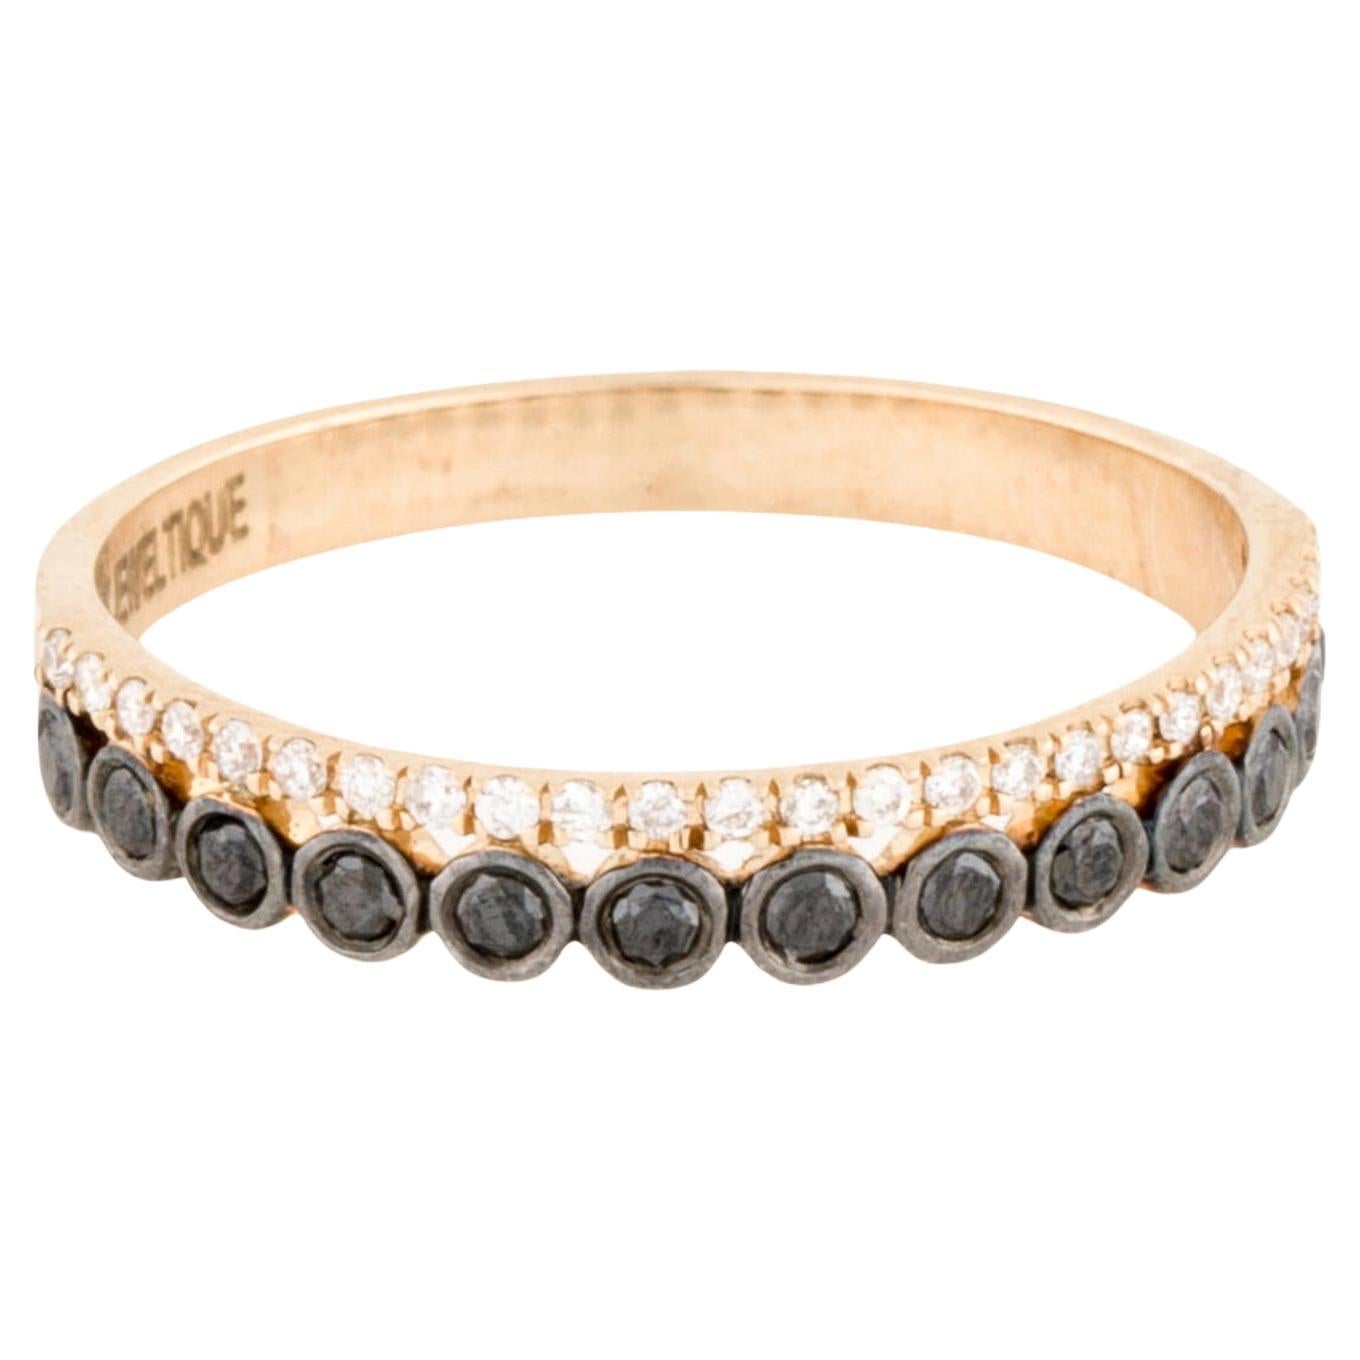 Stunning 14K Diamond Band Ring - Size 6.75 - Luxurious Gemstone Jewelry For Sale